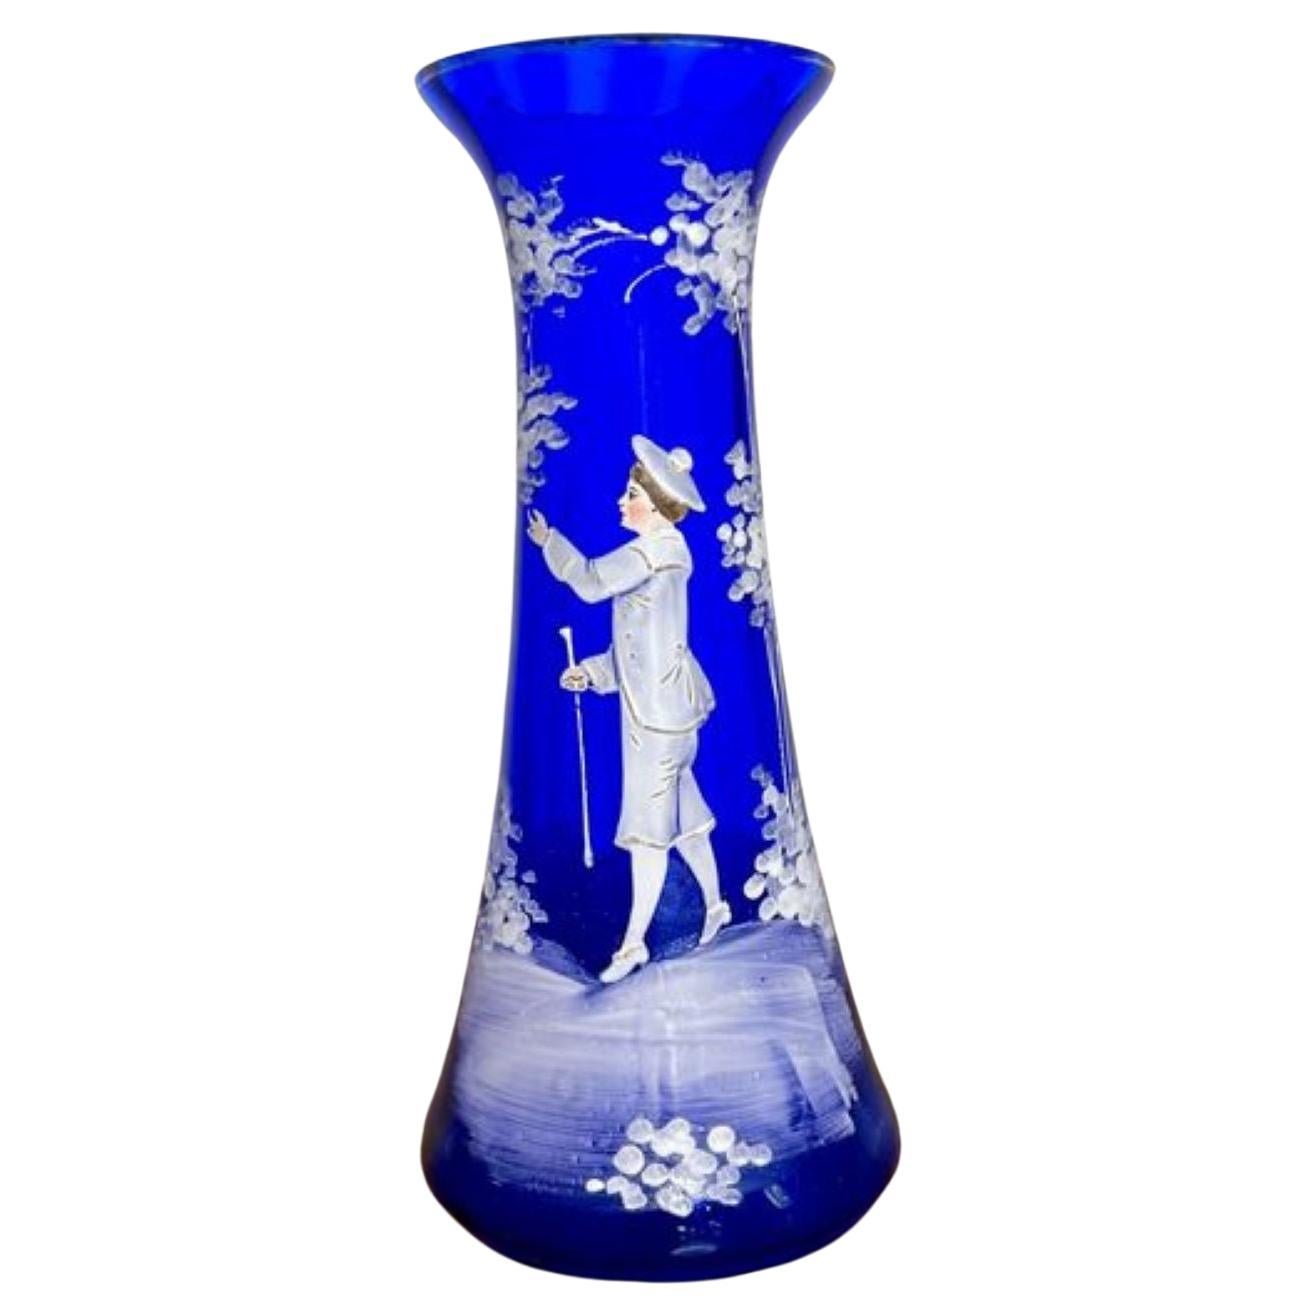 Superbe vase ancien en verre bleu Mary Gregory de qualité